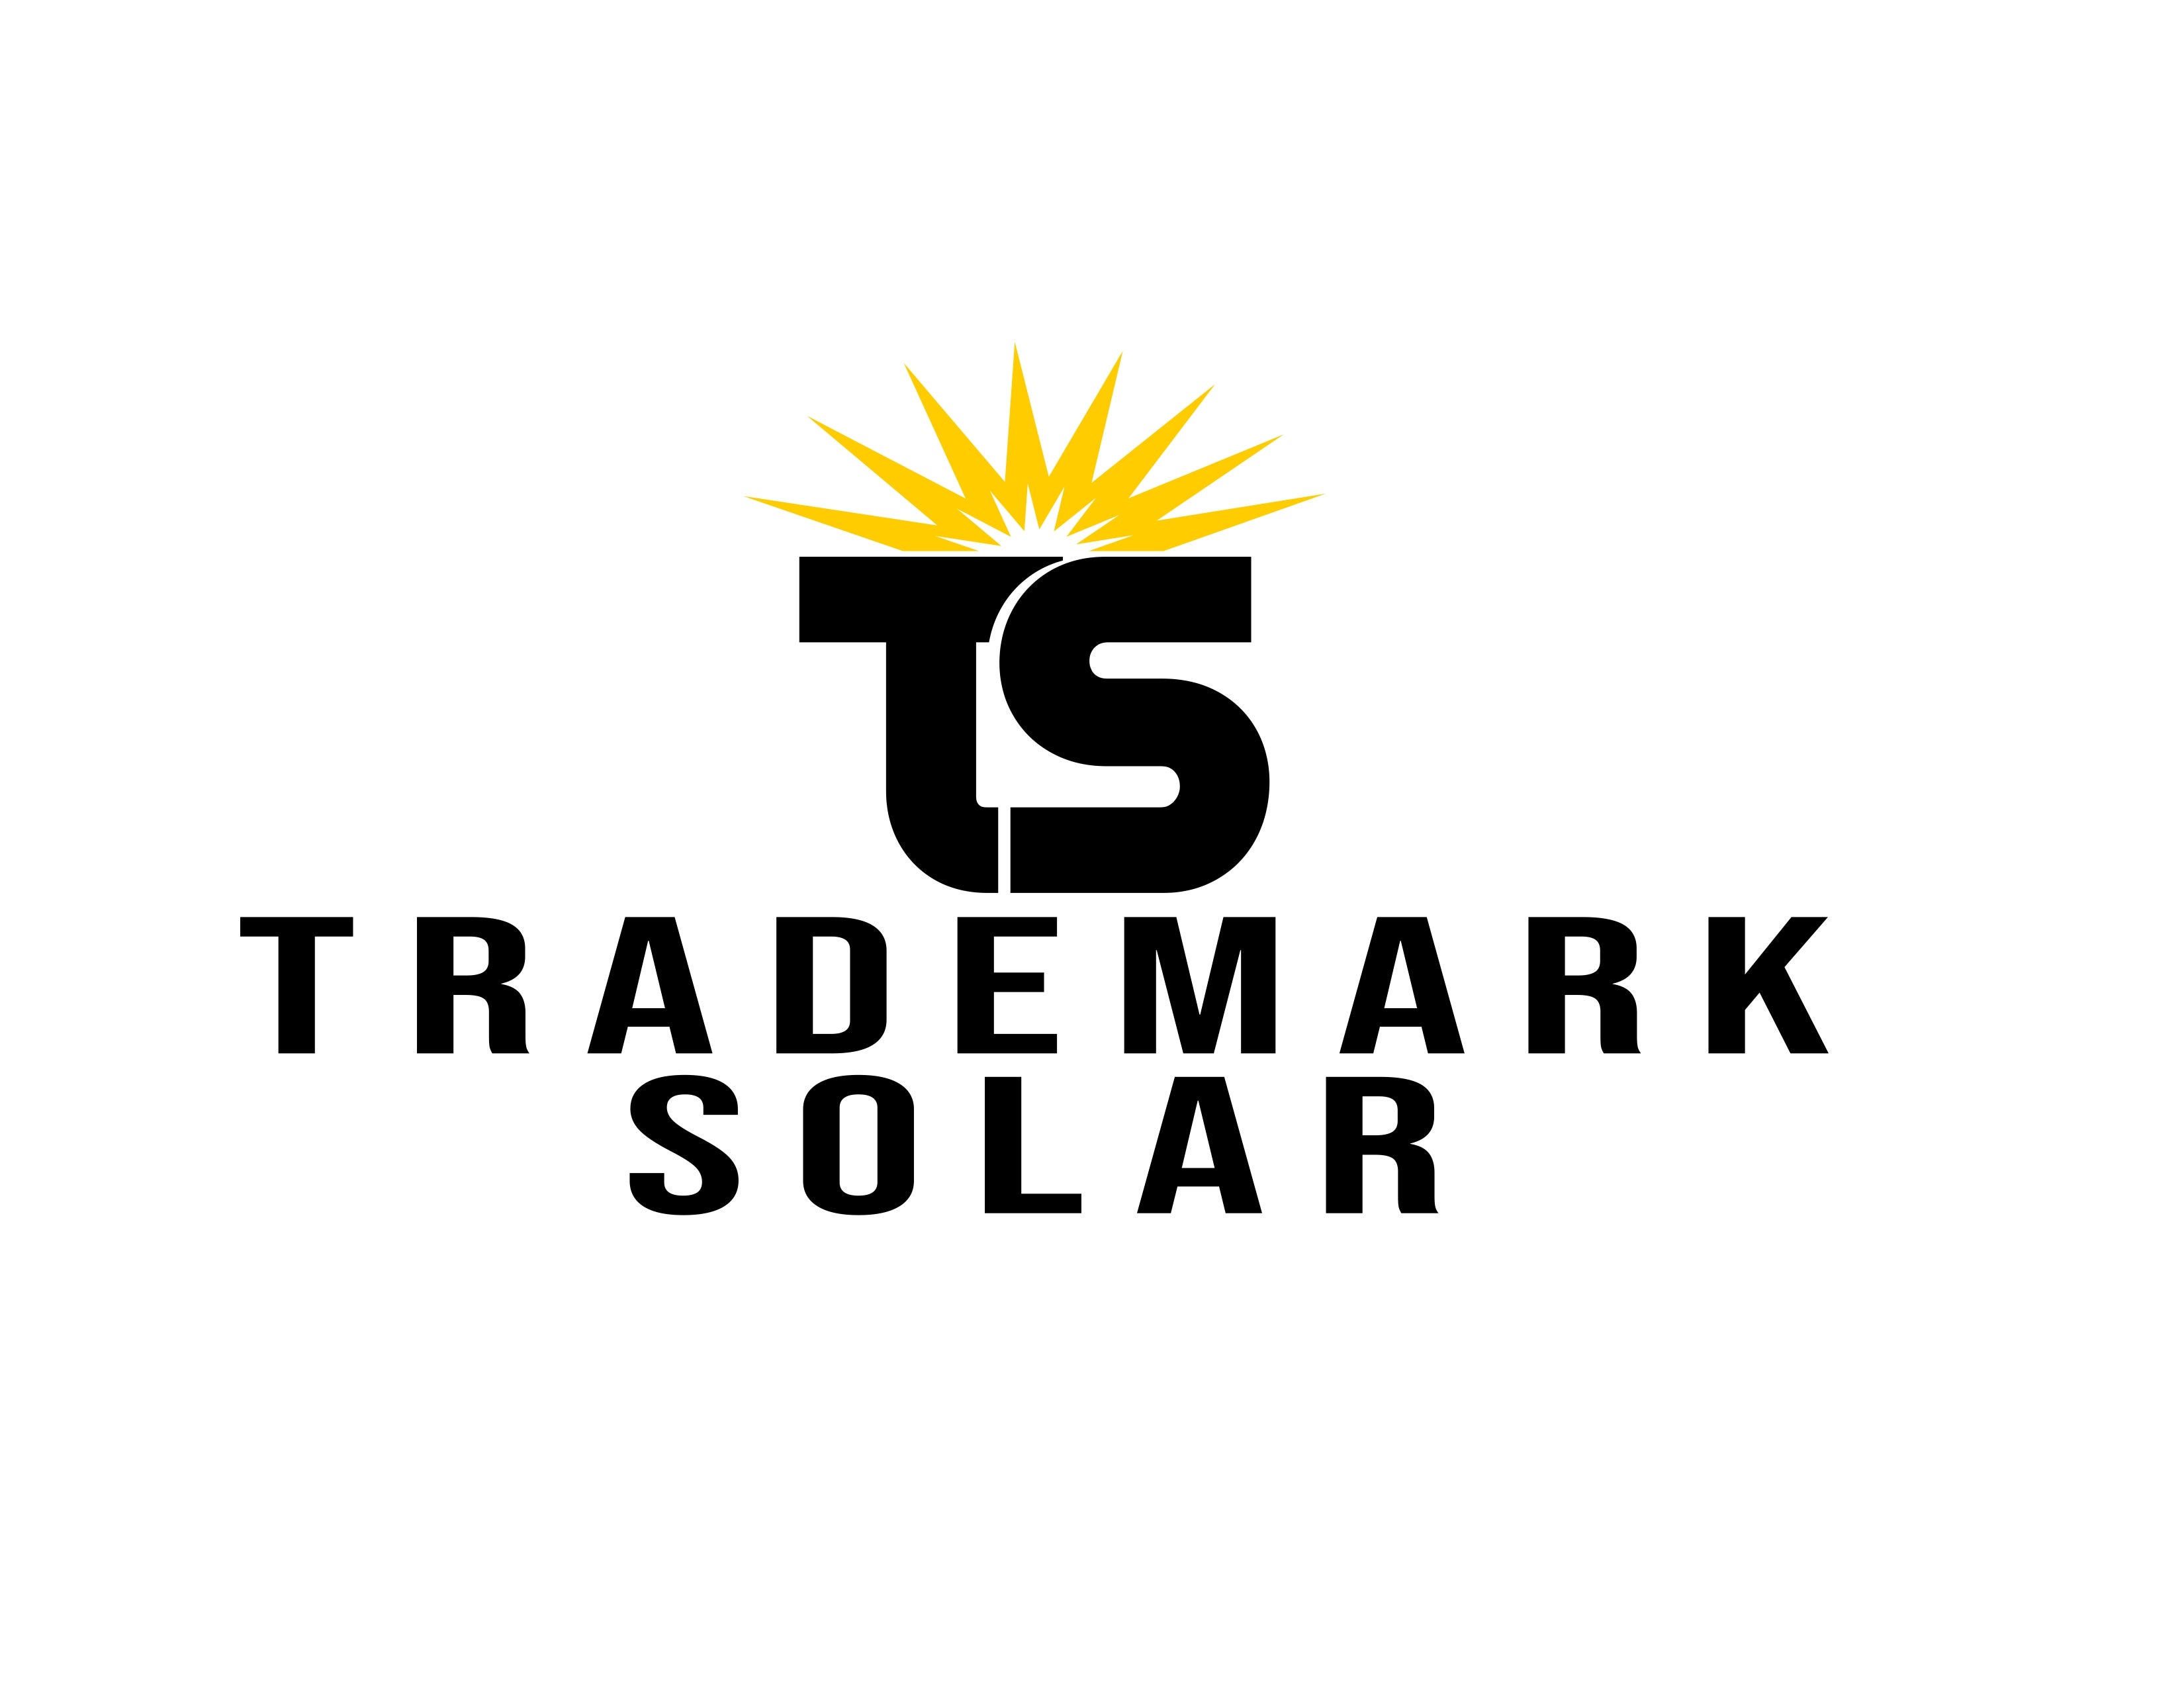 Trademark Solar Inc